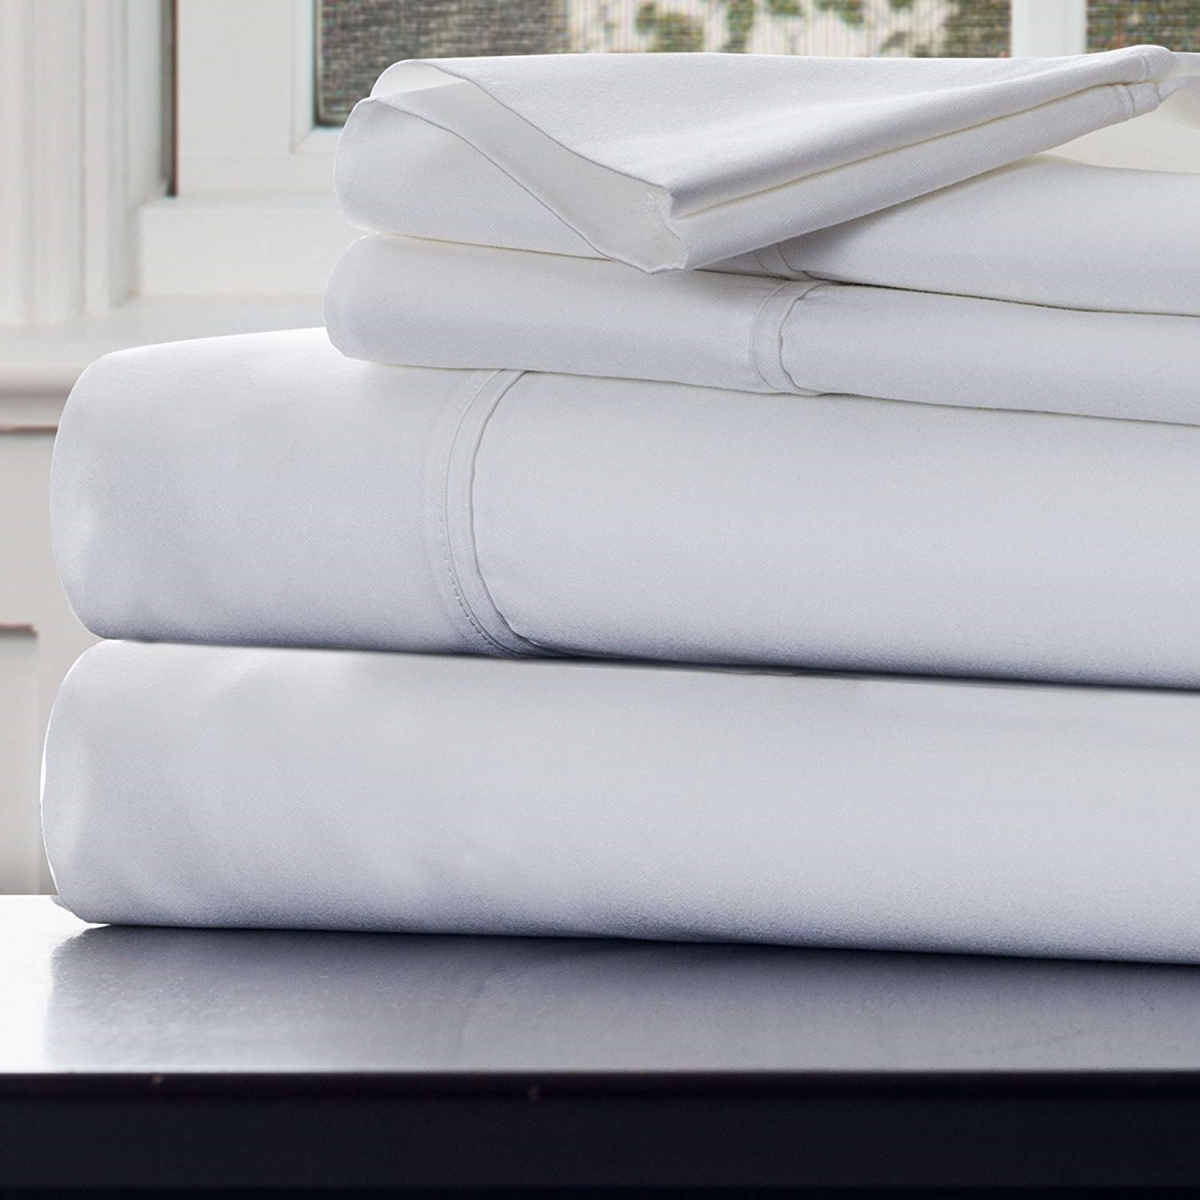 66a-44792 1000 Thread Count Cotton Sateen Sheet Set - Queen Size - White